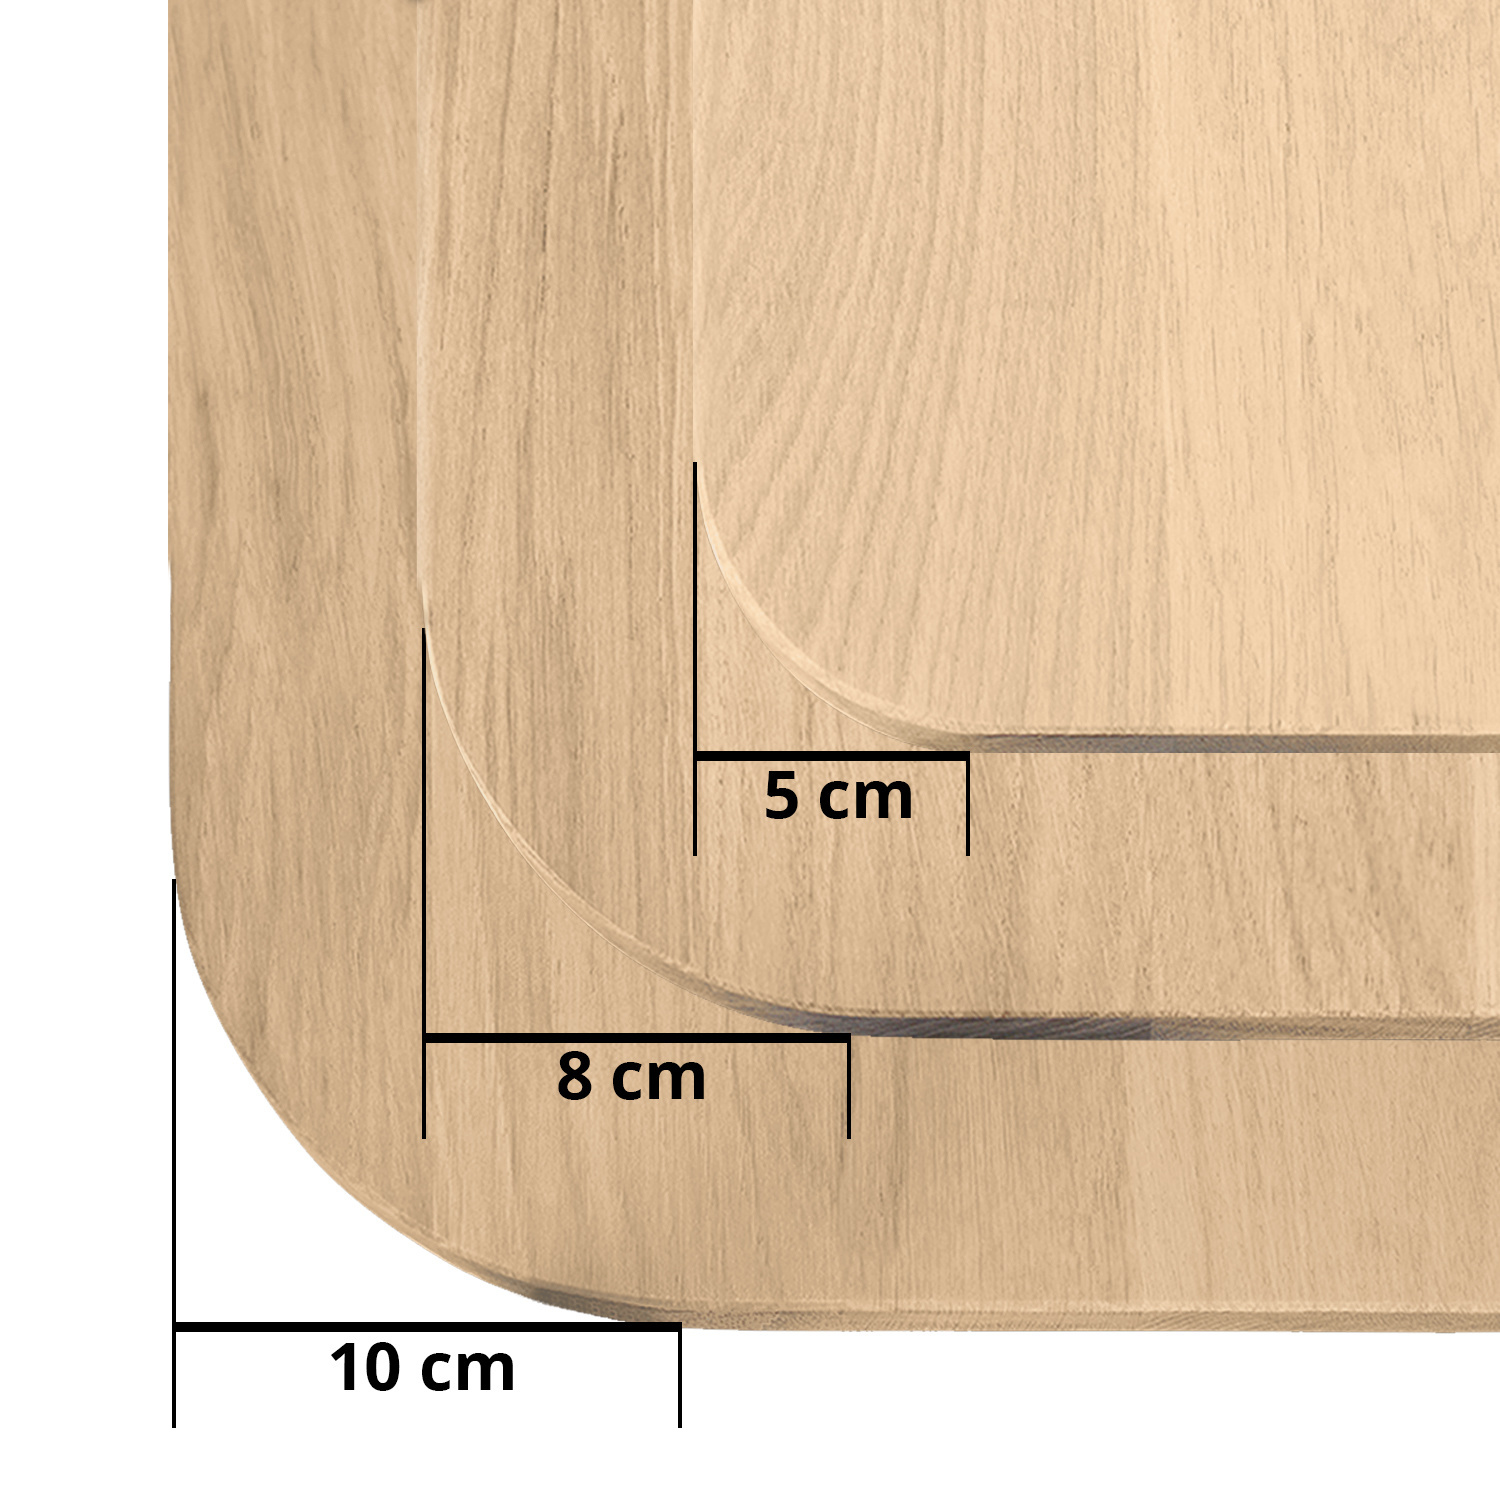  Eiken wandplank zwevend met ronde hoeken - op maat - 2,7 cm dik (1-laag) - rustiek - voorgeboord inclusief (blinde) bevestigingsbeugels - verlijmd Europees eikenhout rustiek - kd 8-12% - 20-30x50-248 cm - Afgeronde hoeken radius 5, 8, of 10 cm